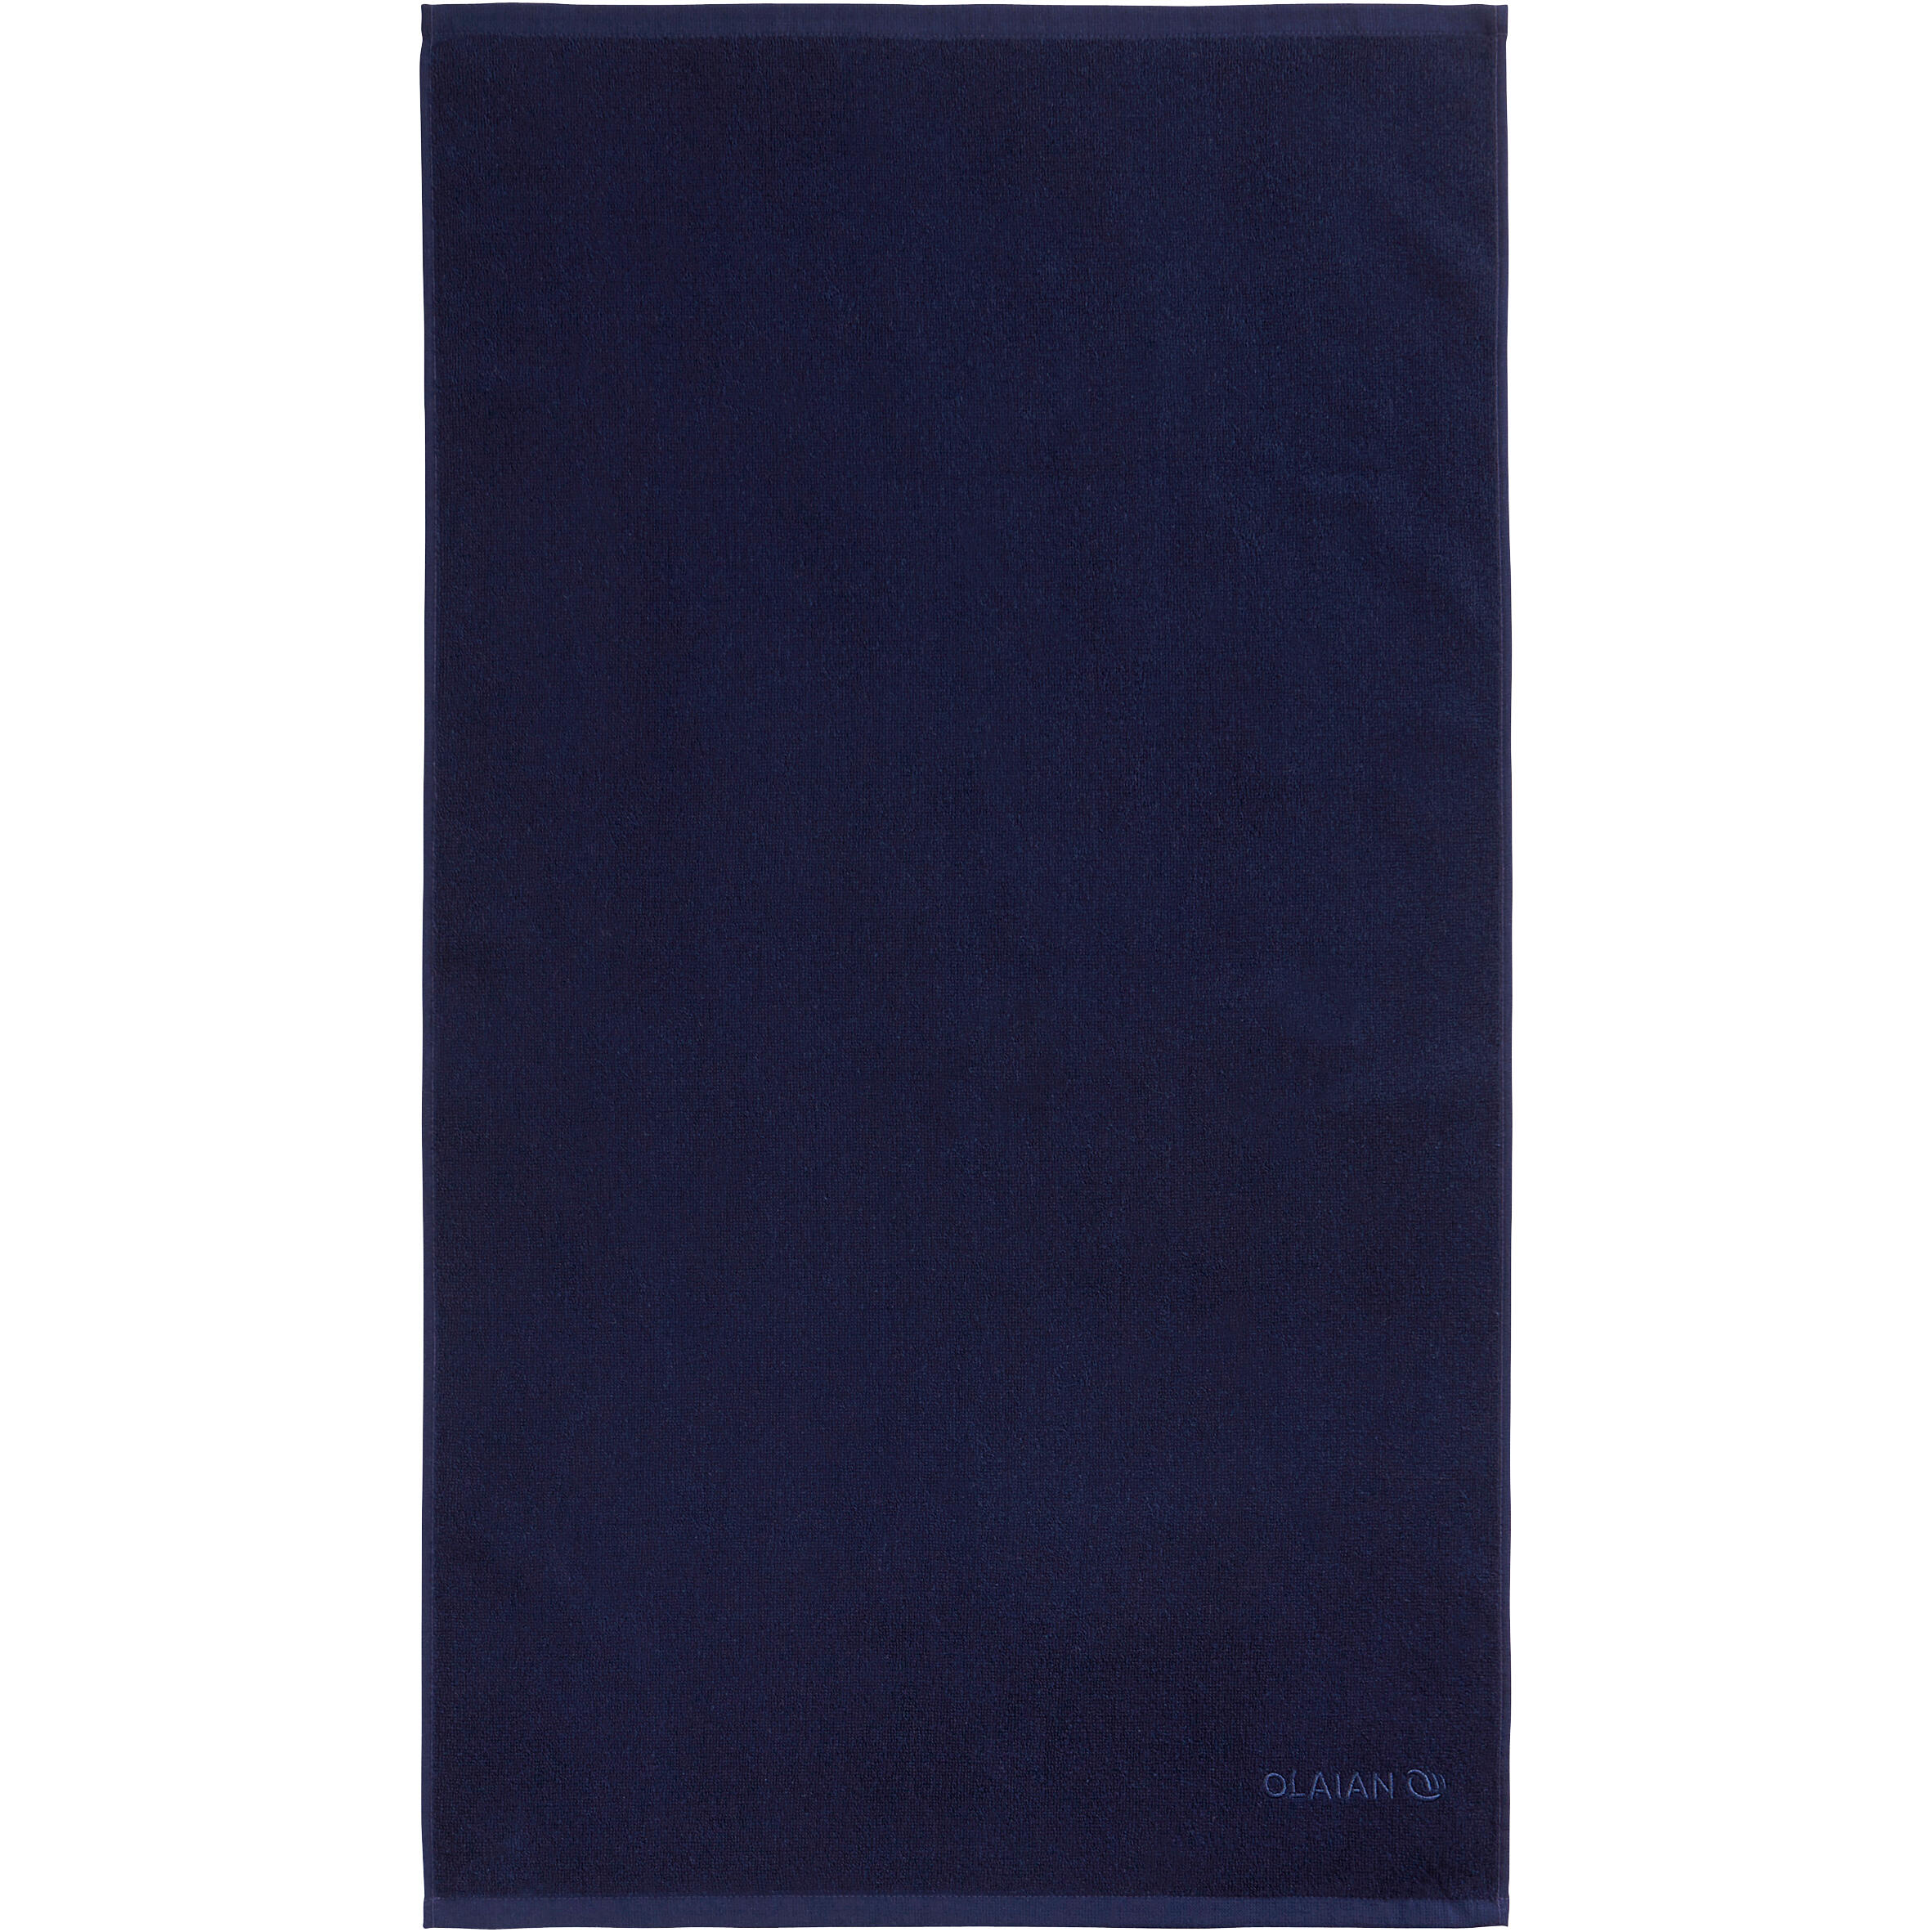 Strandhandtuch S 90 × 50 cm dunkelblau